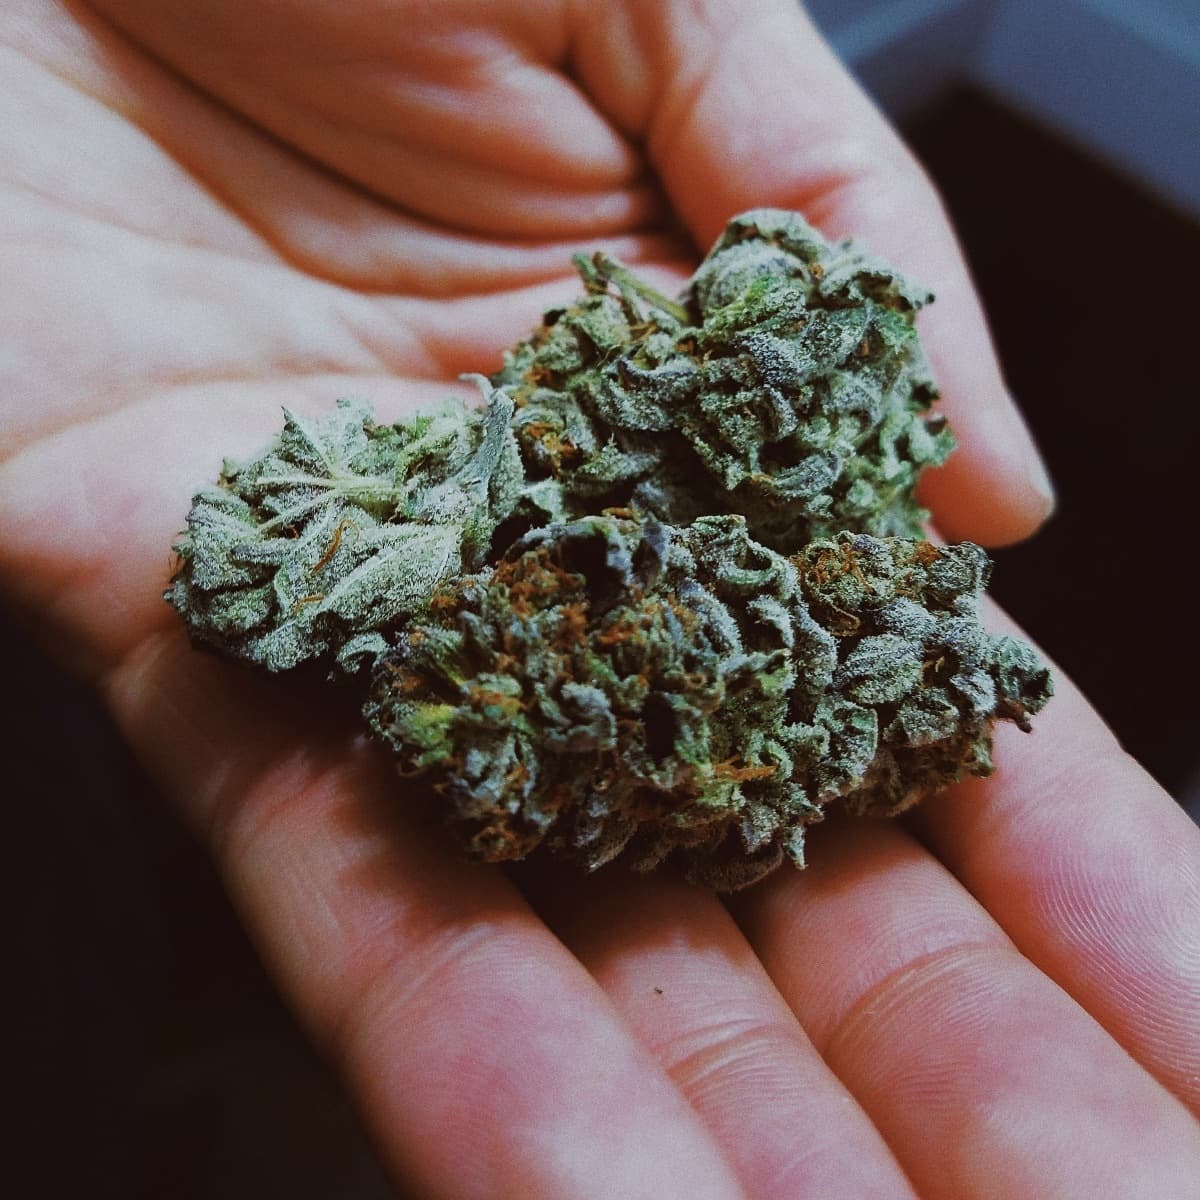 cannabis buds in an open hand